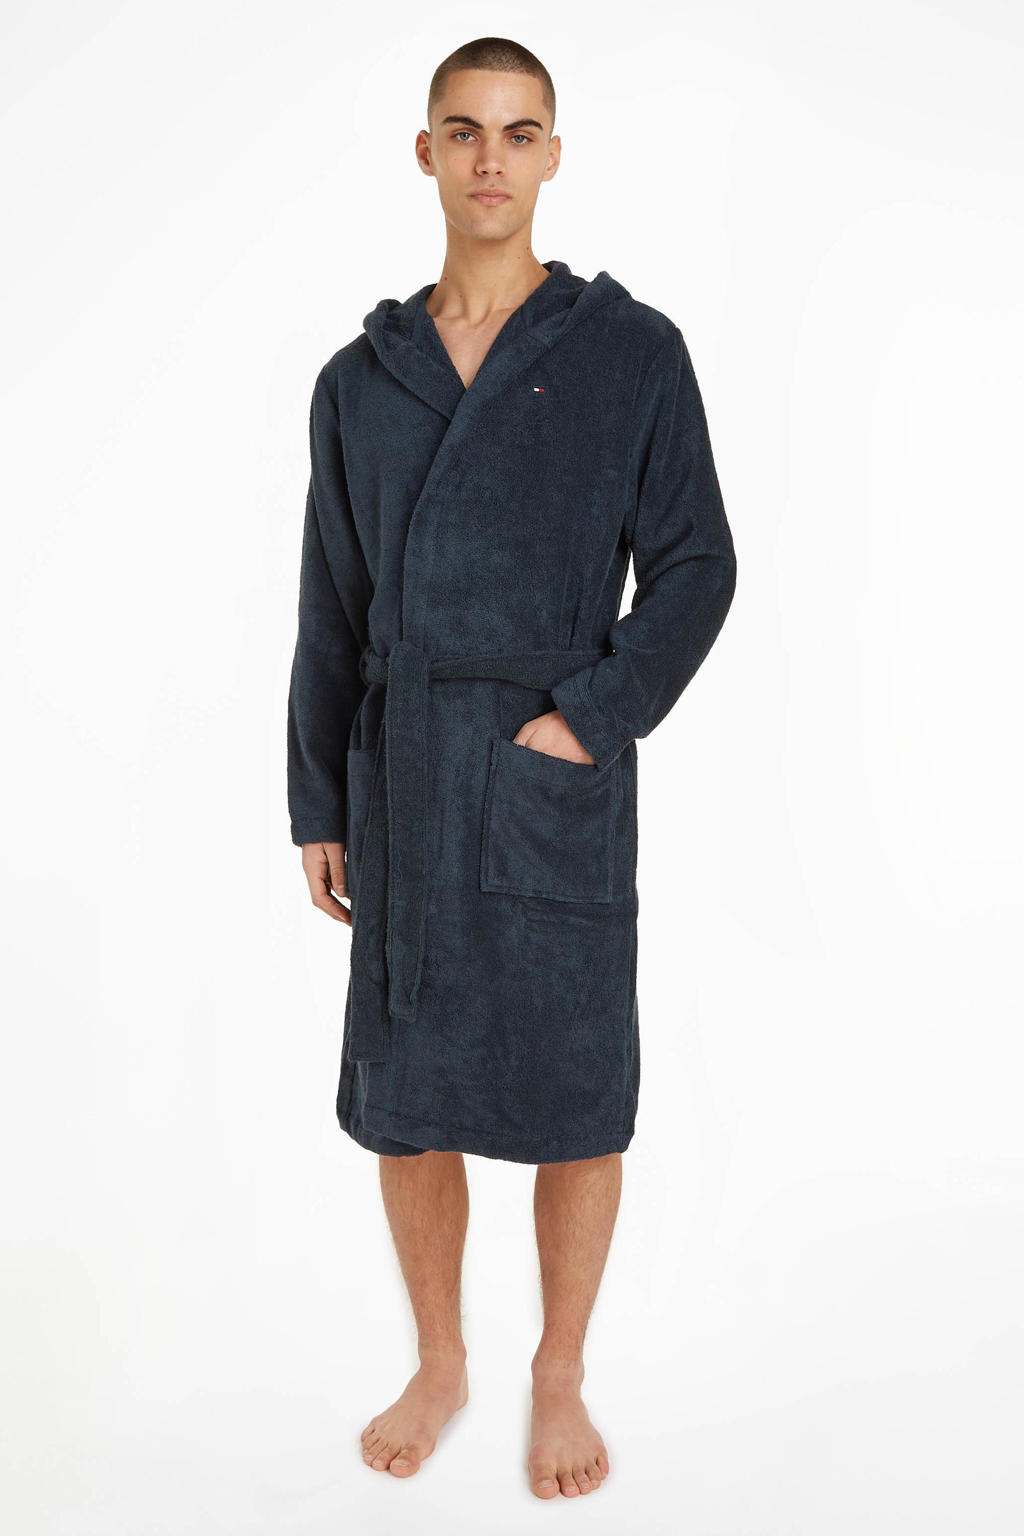 Tommy Hilfiger badstof badjas met capuchon donkerblauw